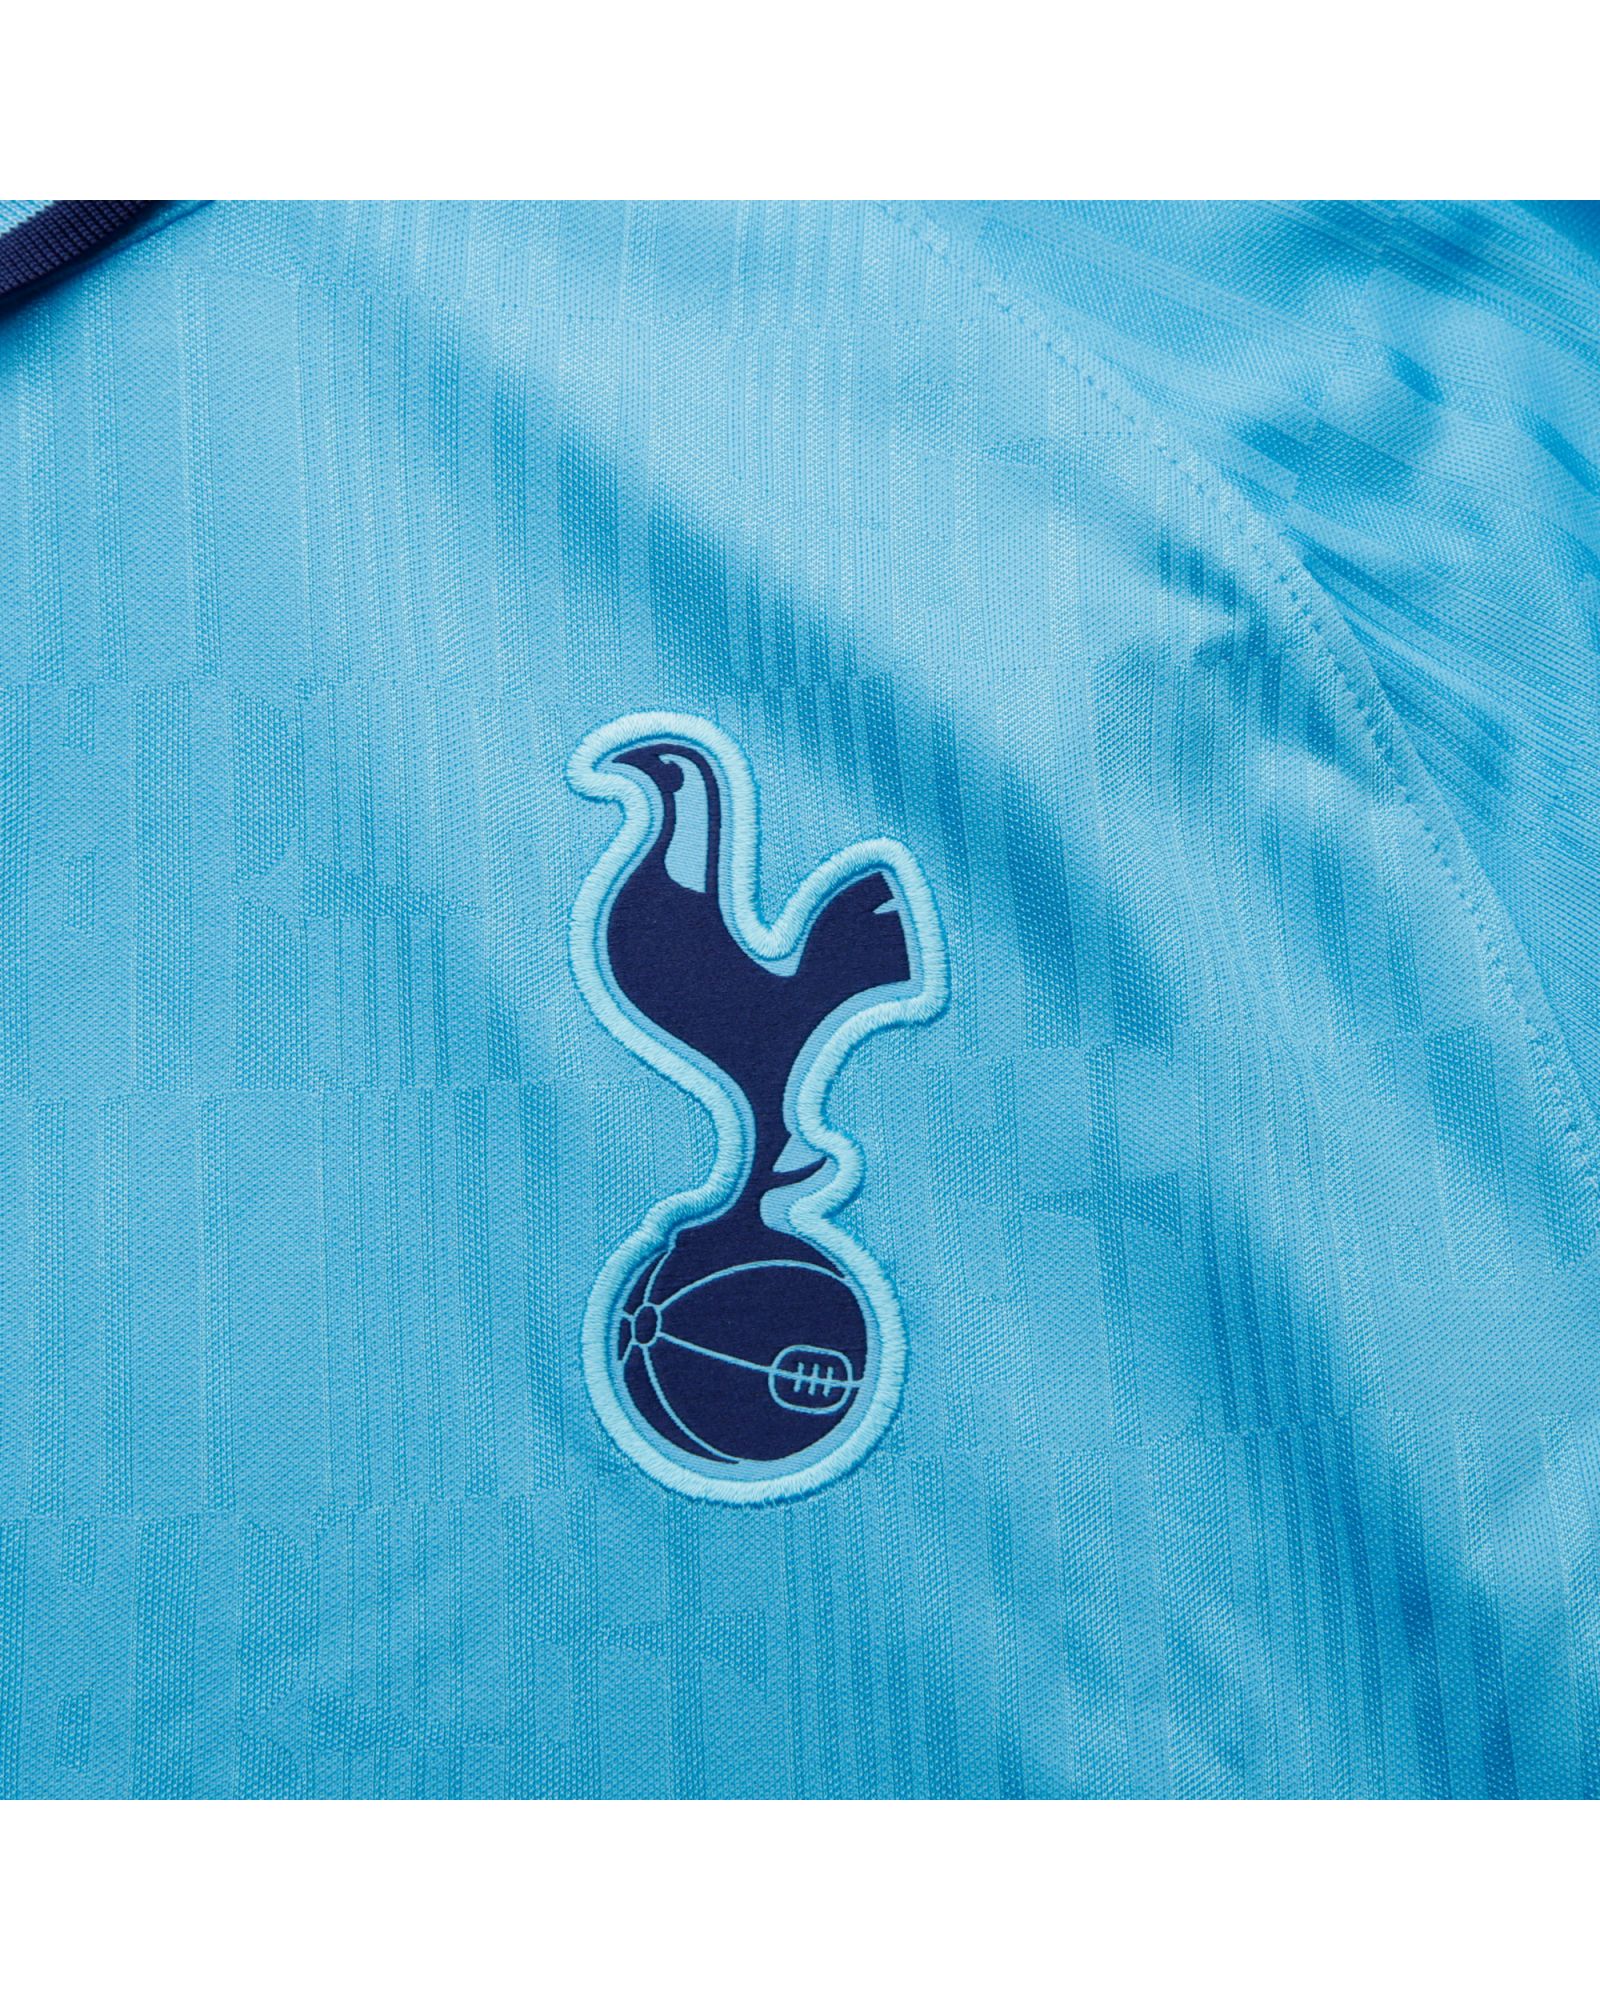 Camiseta 3ª Tottenham Hotspurs 2019/2020 Azul - Fútbol Factory